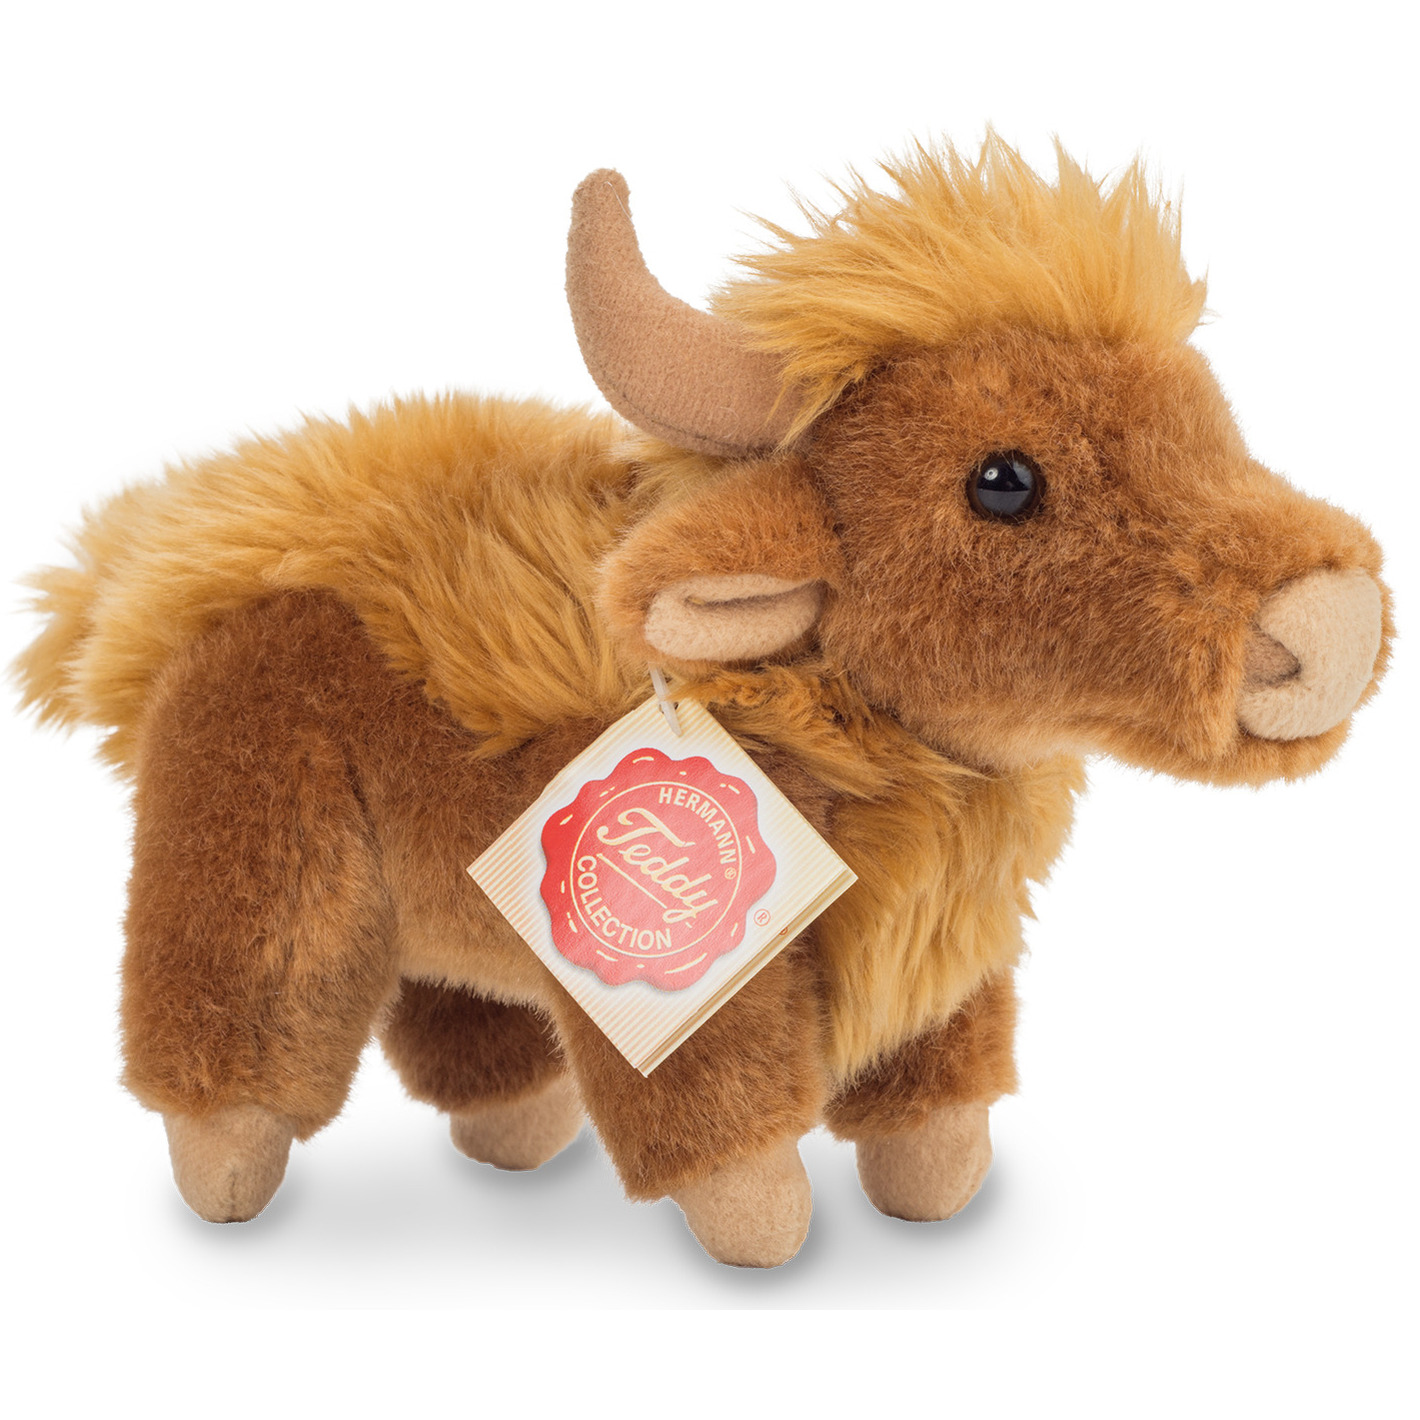 Hermann Teddy Knuffeldier Schotse hooglander koe pluche premium knuffels bruin 17 cm